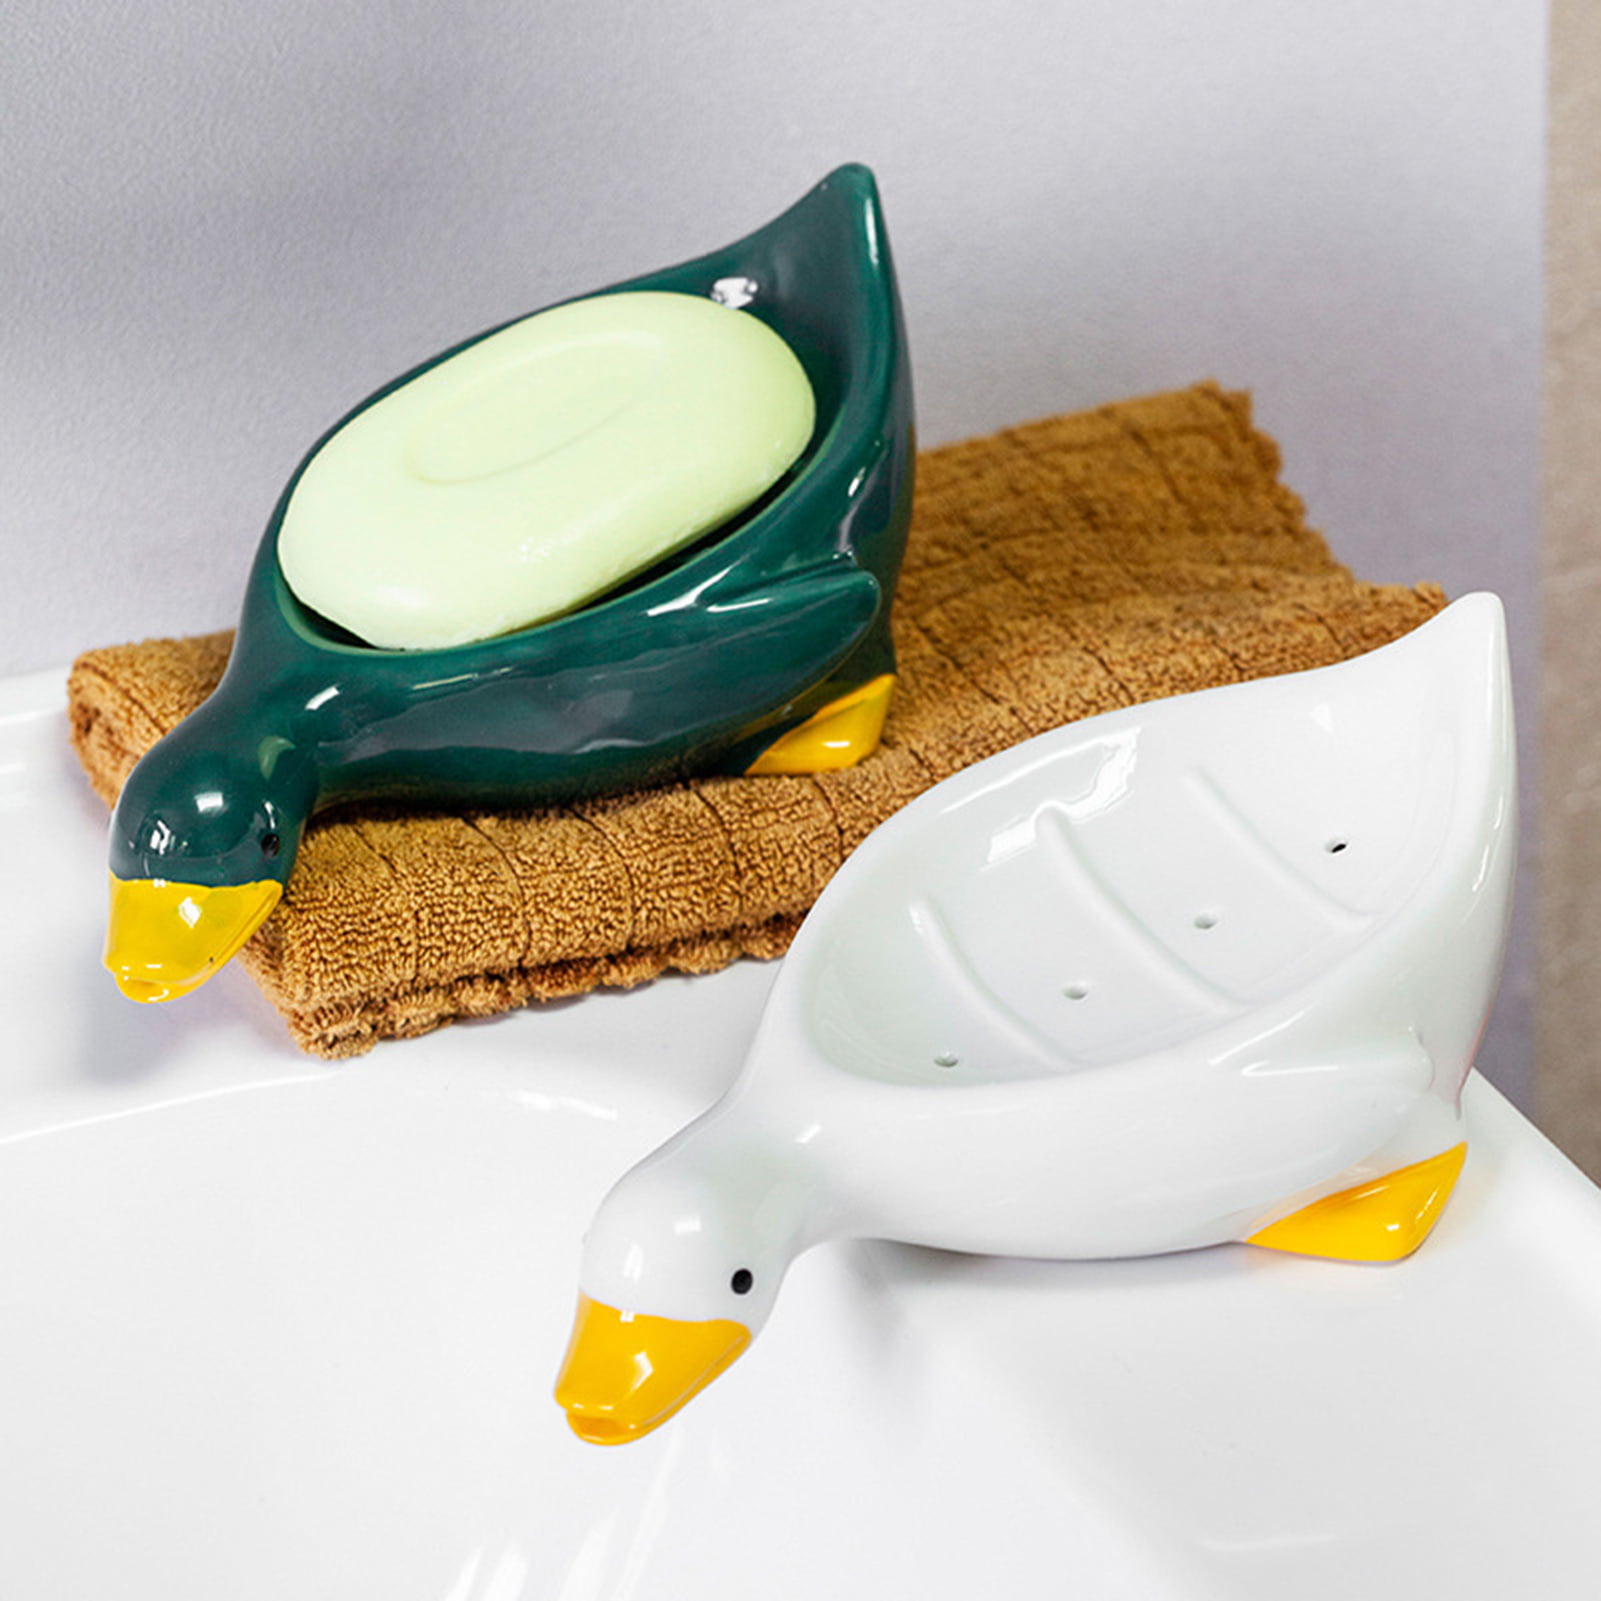 Duck Soap Dish - Ceramic - Keep Soap Dry - ApolloBox